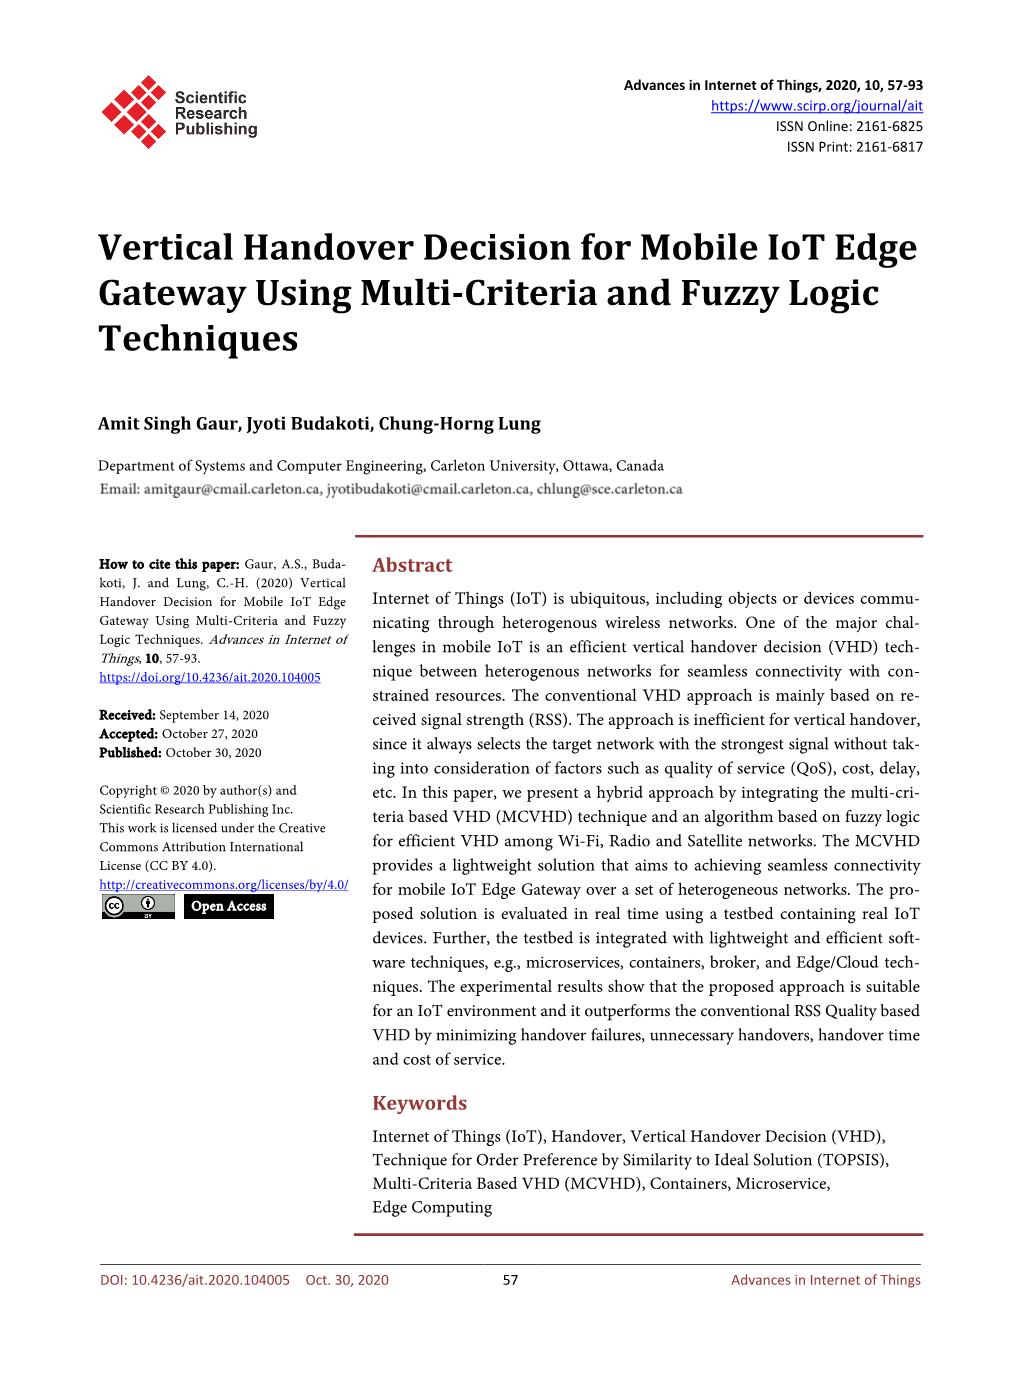 Vertical Handover Decision for Mobile Iot Edge Gateway Using Multi-Criteria and Fuzzy Logic Techniques